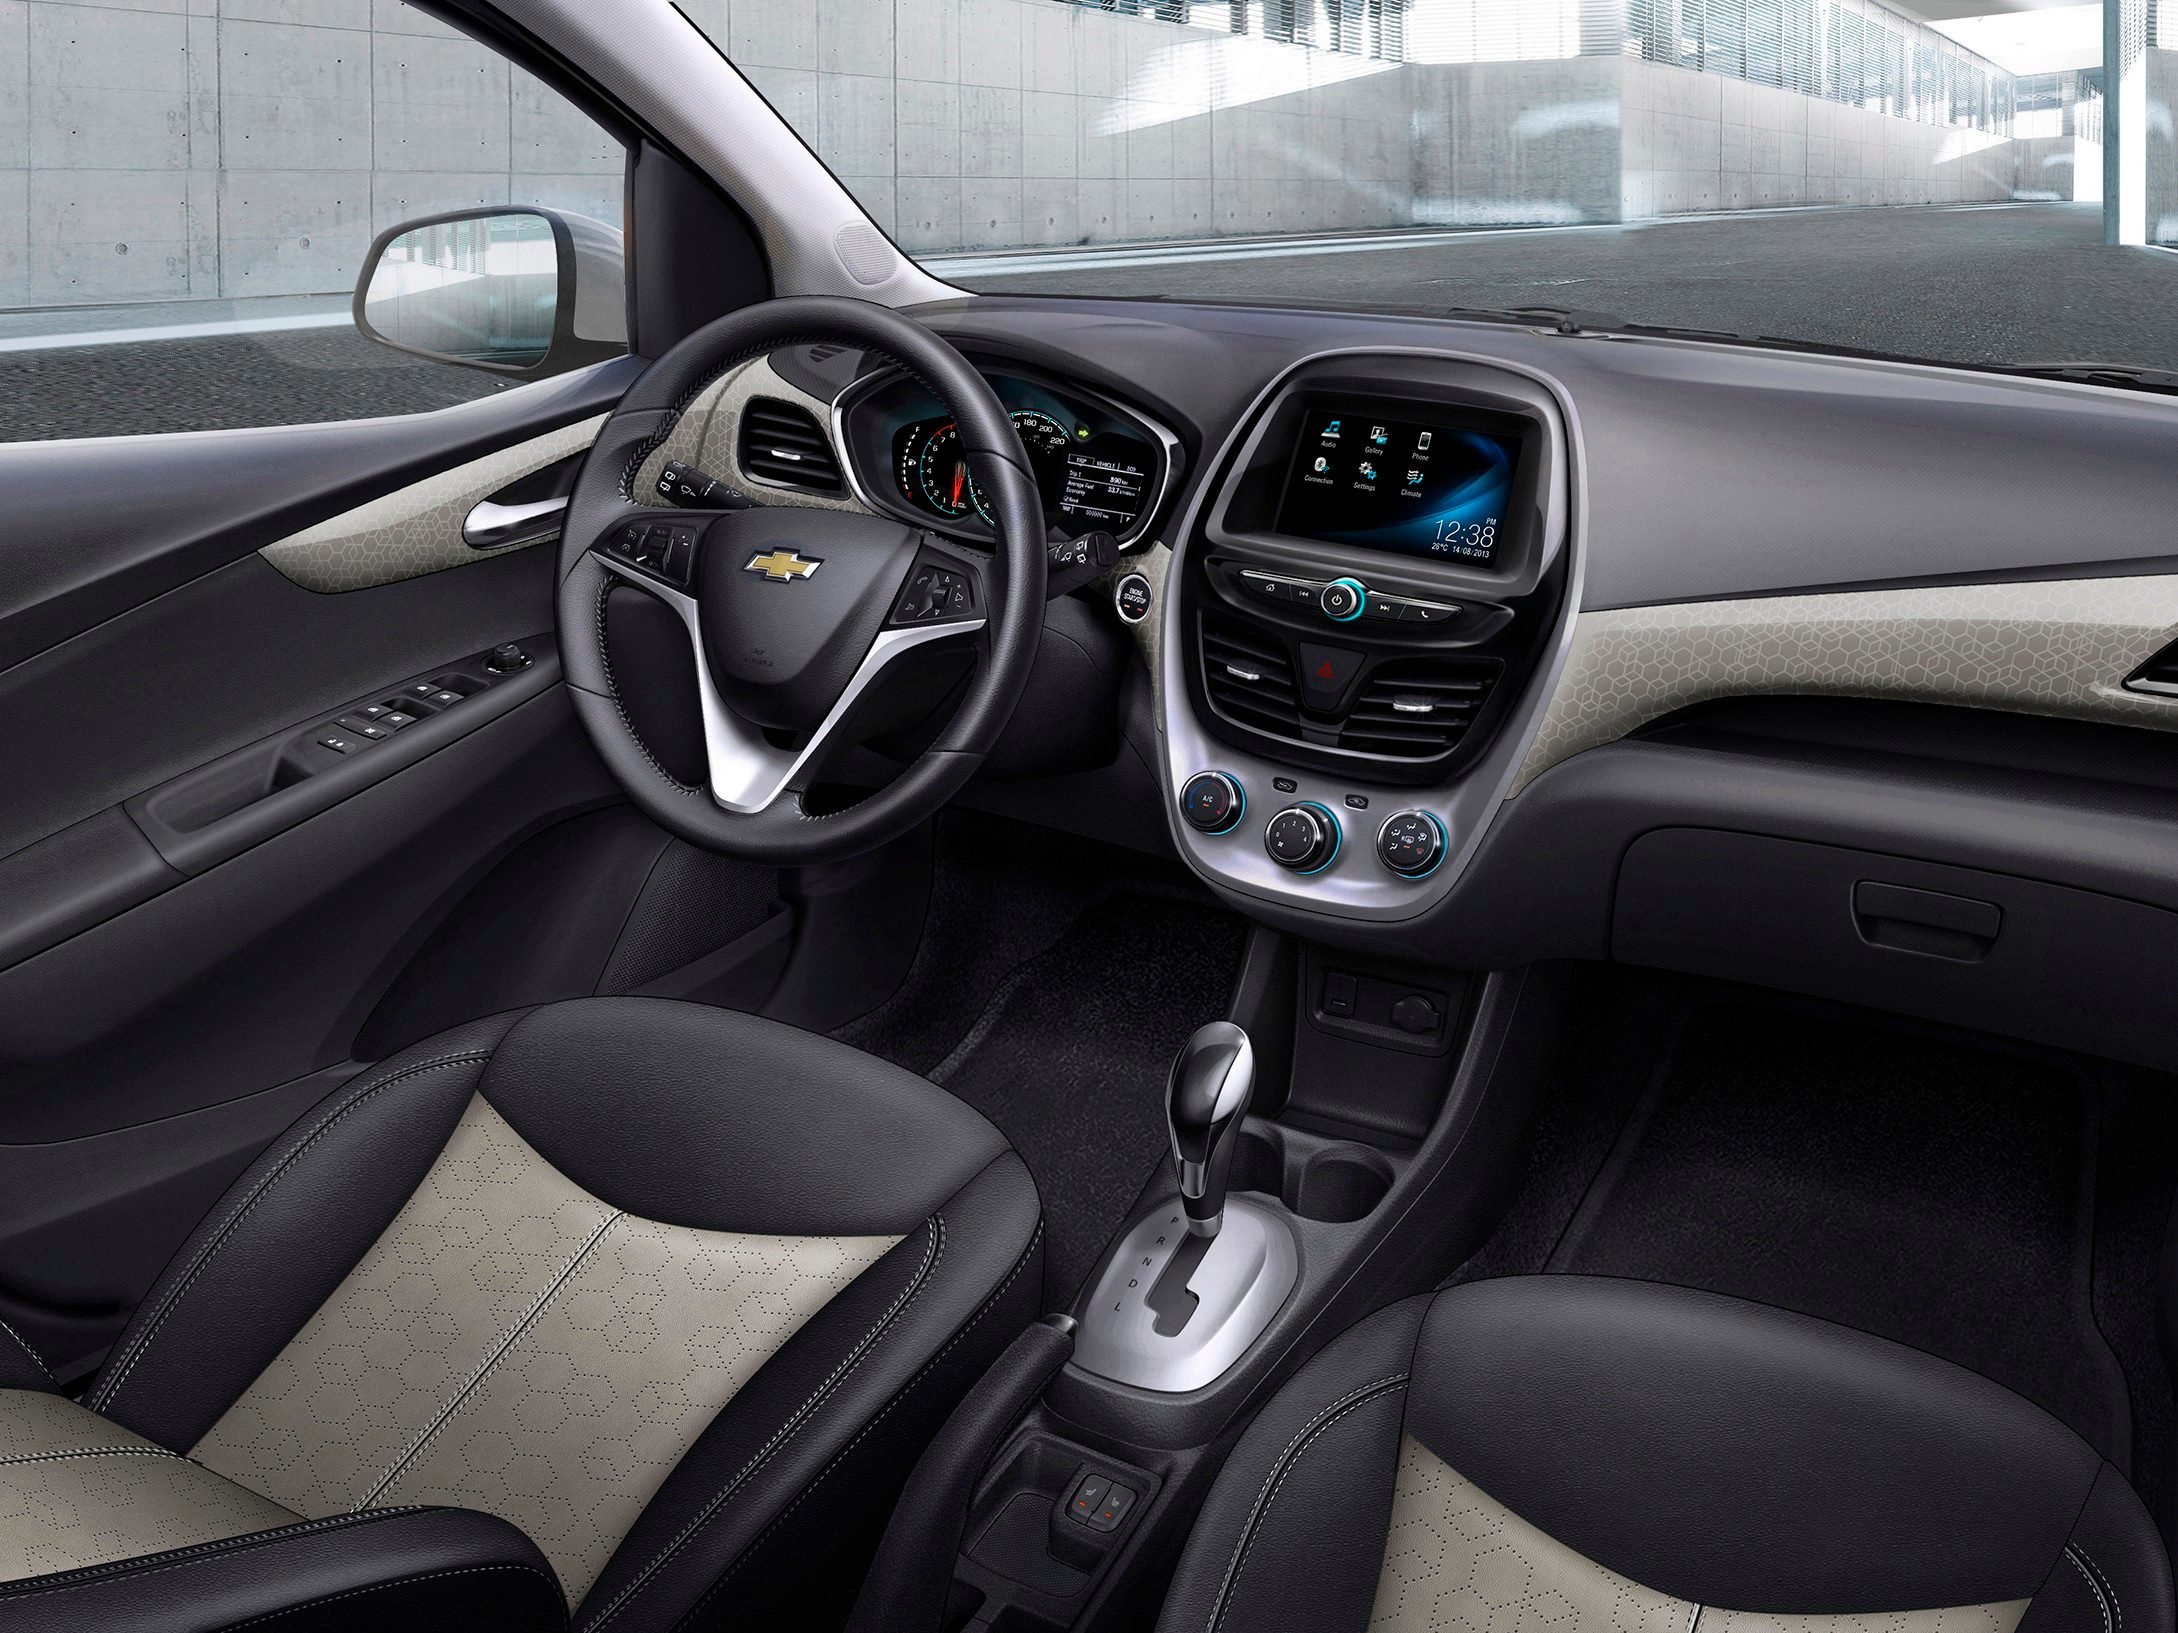 3. The 2016 Chevrolet Spark has an enhanced instrument panel.